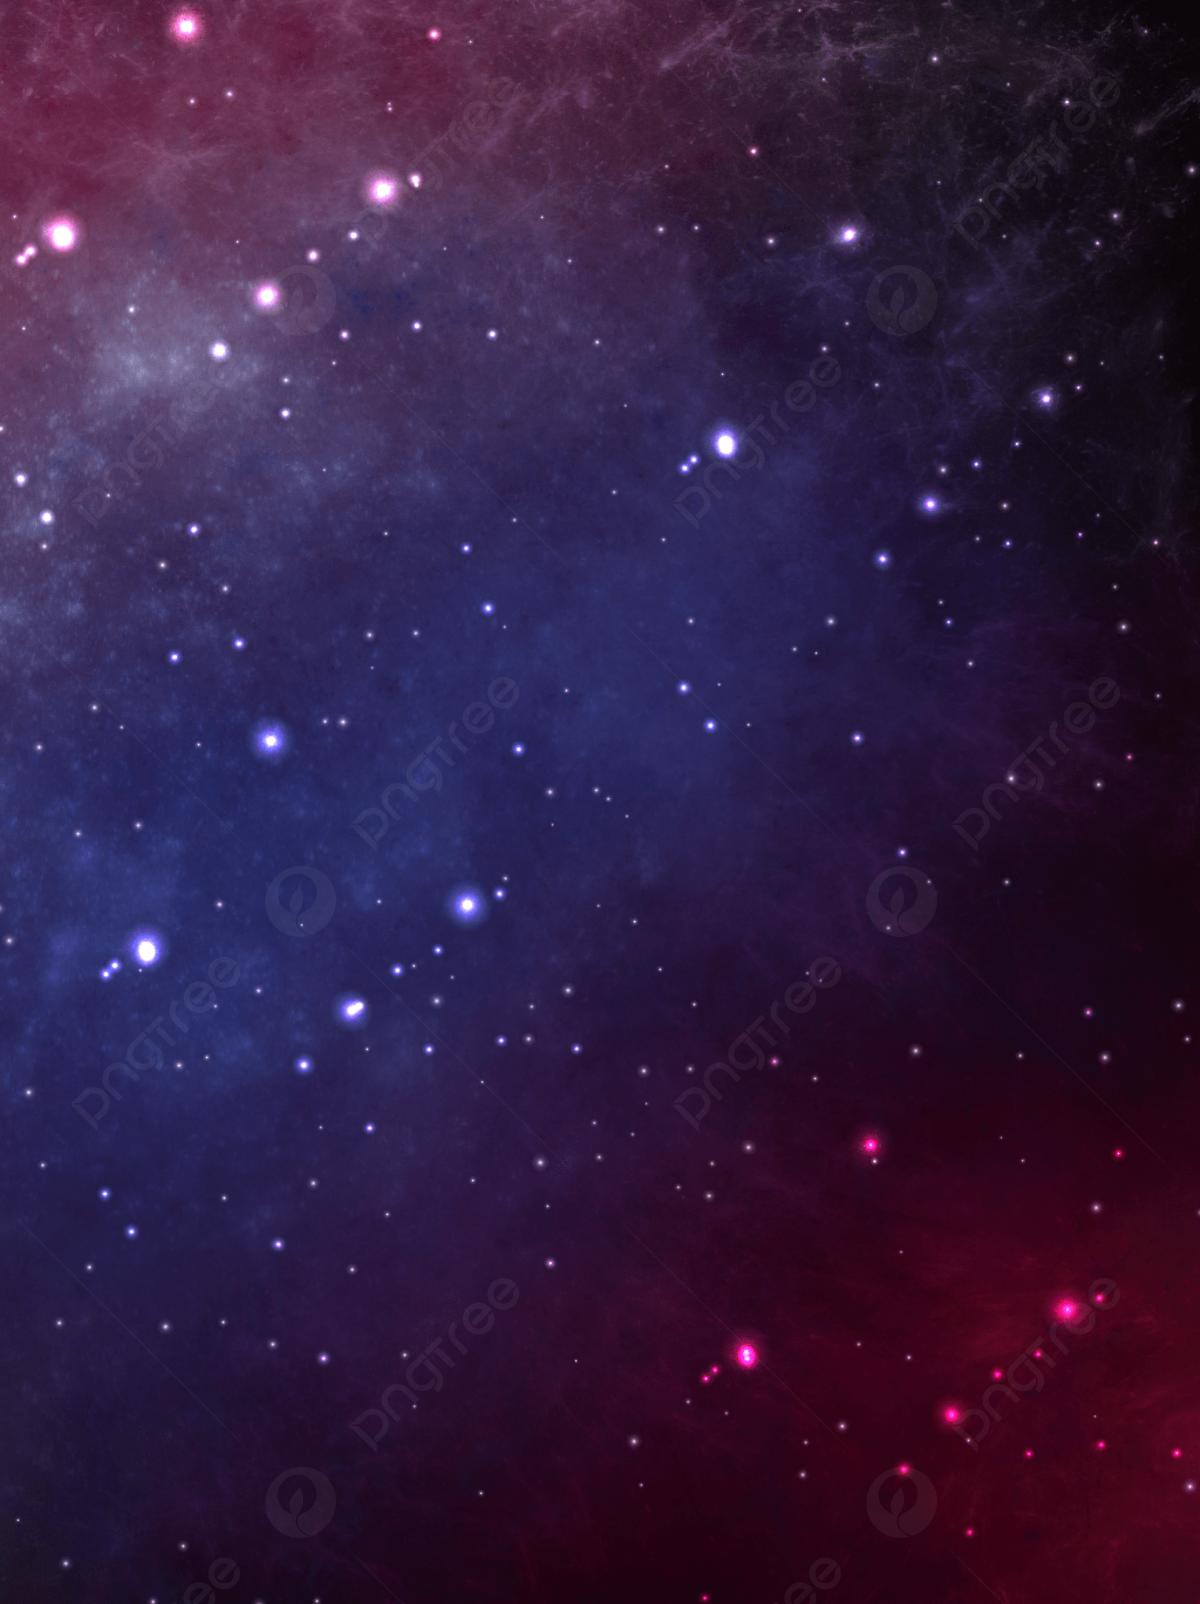 Galaxy Иллюстрации, Космический Фон Со Звездами, Туманности, Космос Облака  На Звездное Небо Фотография, картинки, изображения и сток-фотография без  роялти. Image 66928321